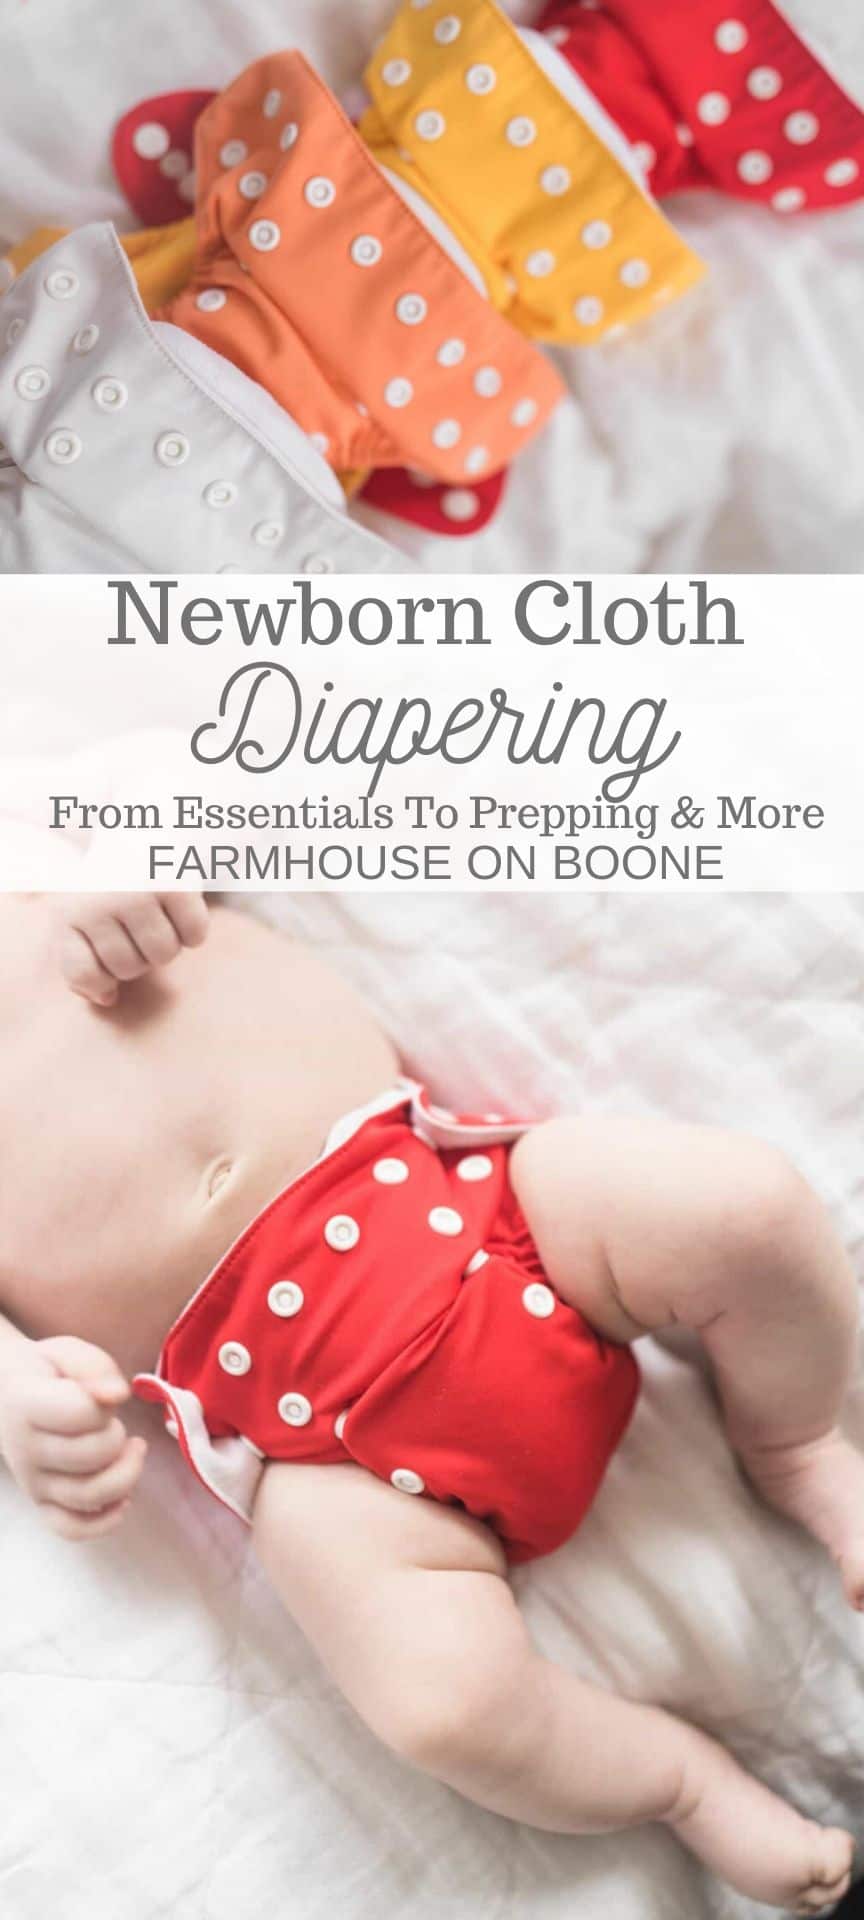 https://www.farmhouseonboone.com/wp-content/uploads/2020/01/Newborn-Cloth-Diapers.jpg